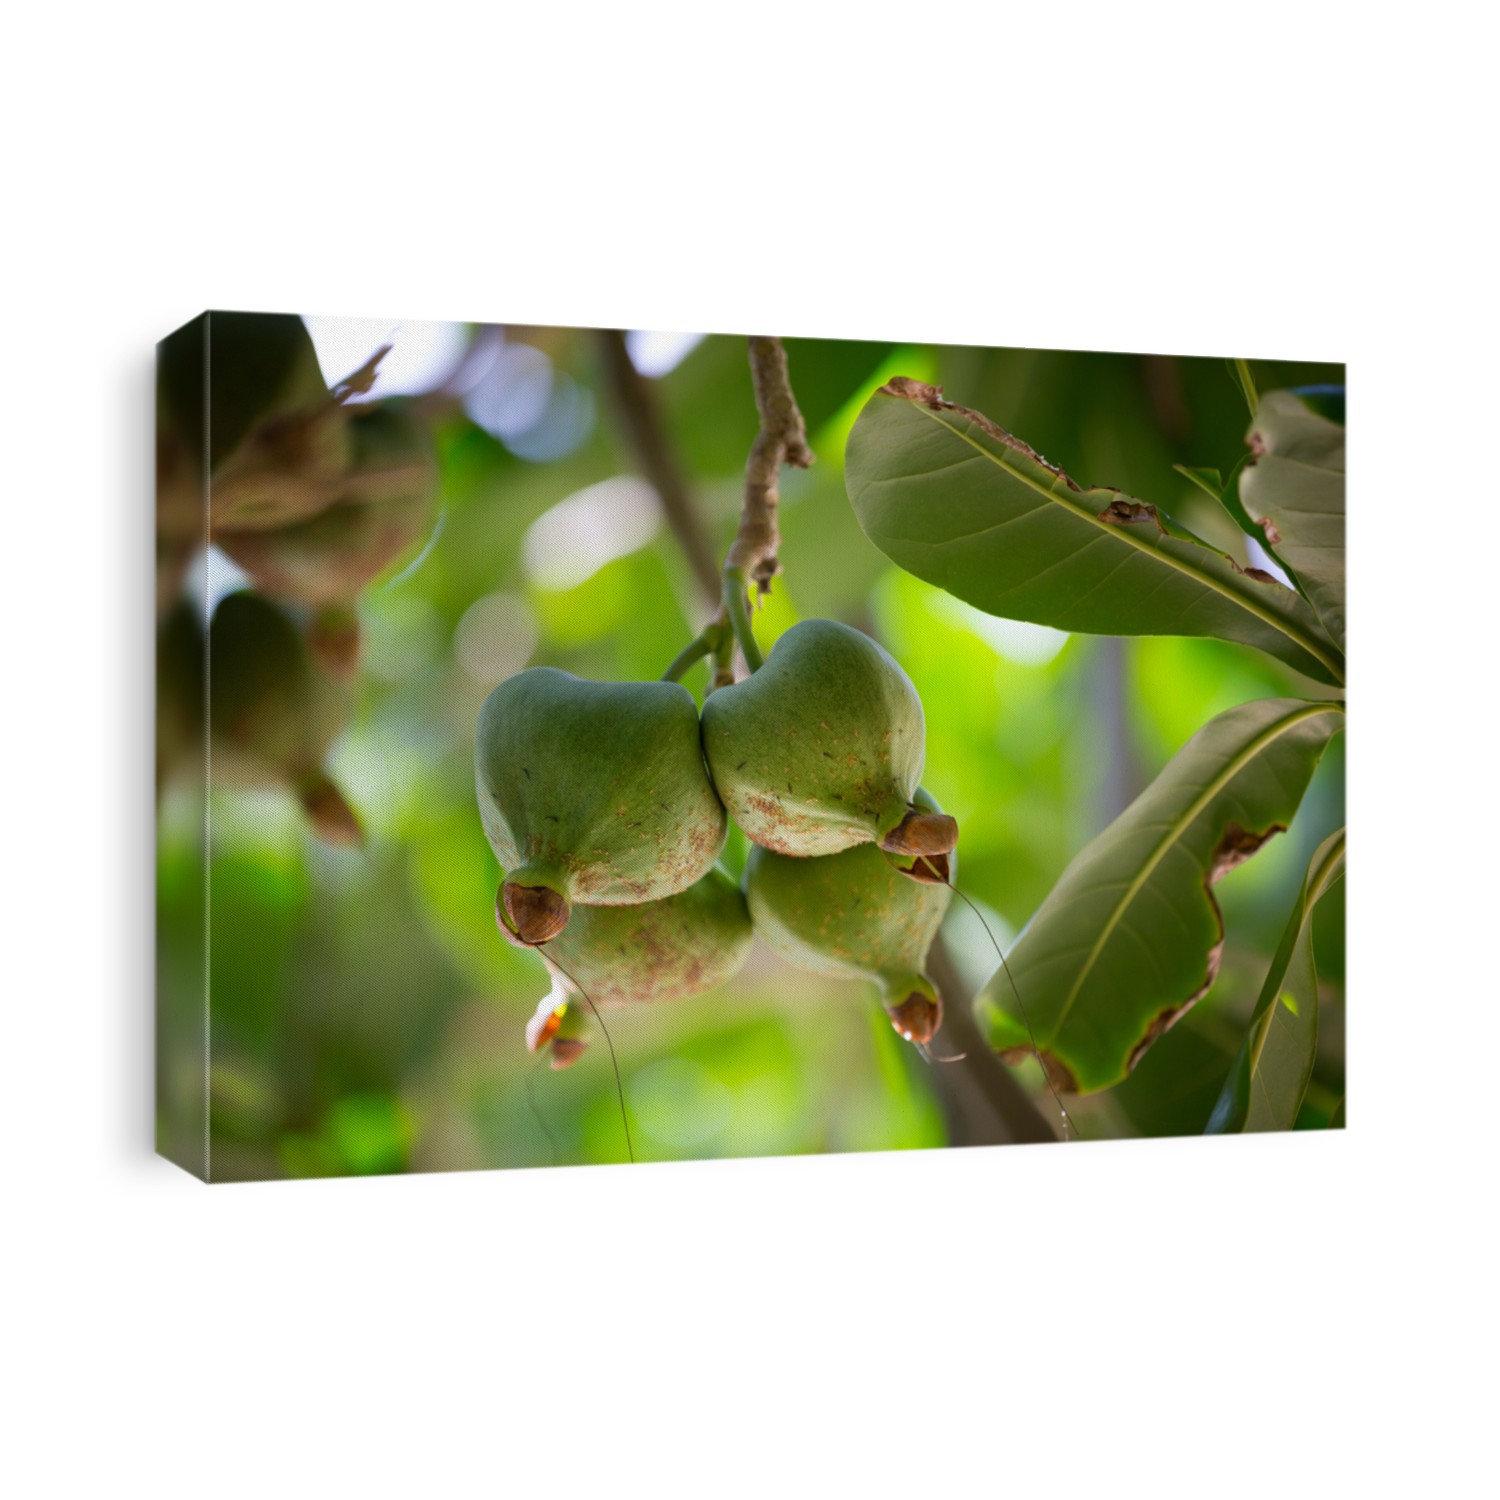 Fruits Barringtonia, Barringtonia asiatica also known as BOTONG or Sea Poison Tree